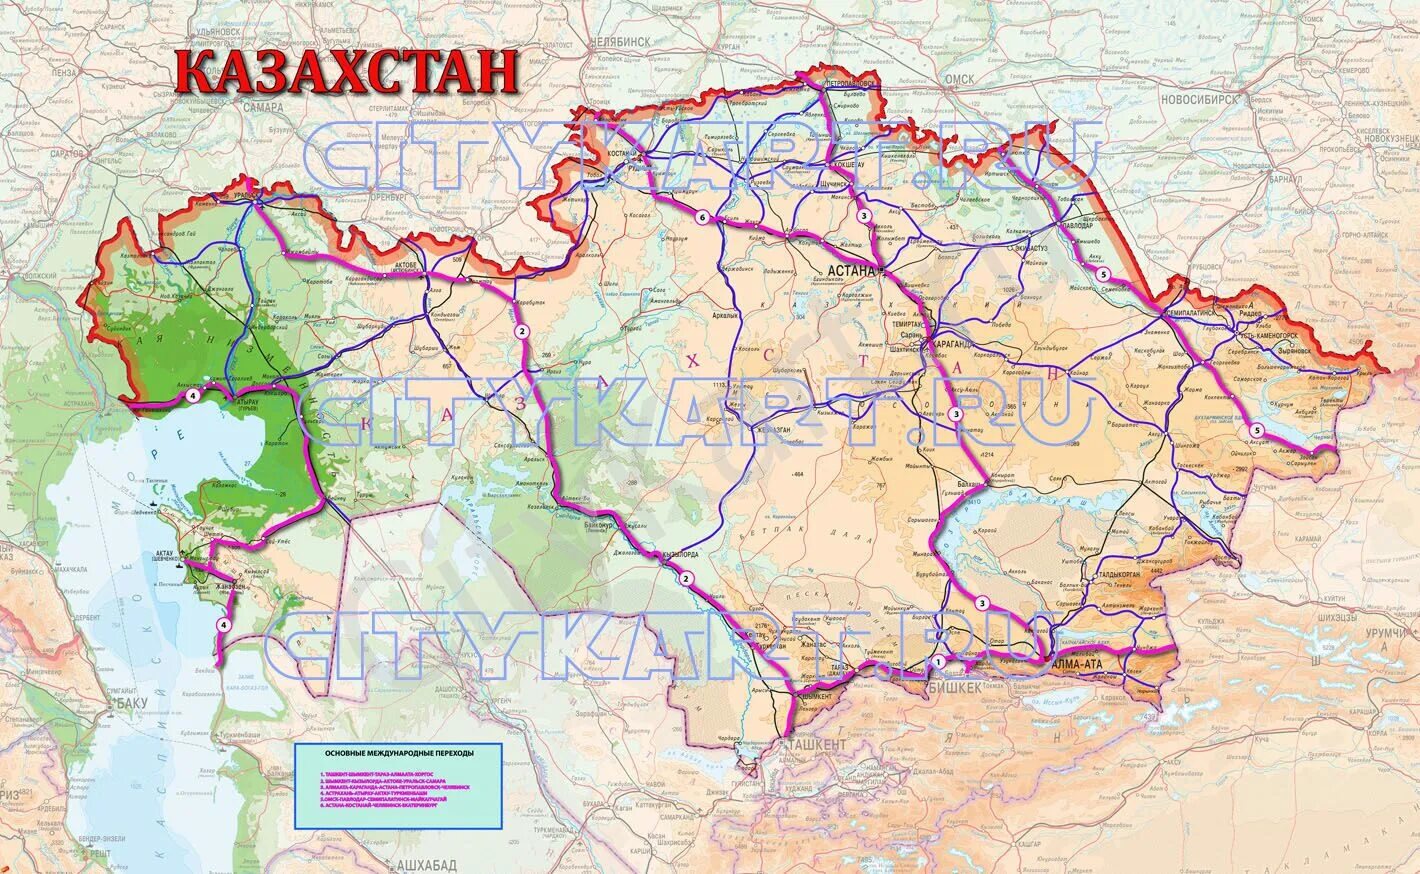 Казахстан сегодня карта. Казахстан на карте. Авто карта Казахстана. Границы Казахстана на карте. Карта автомобильных дорог Казахстана.